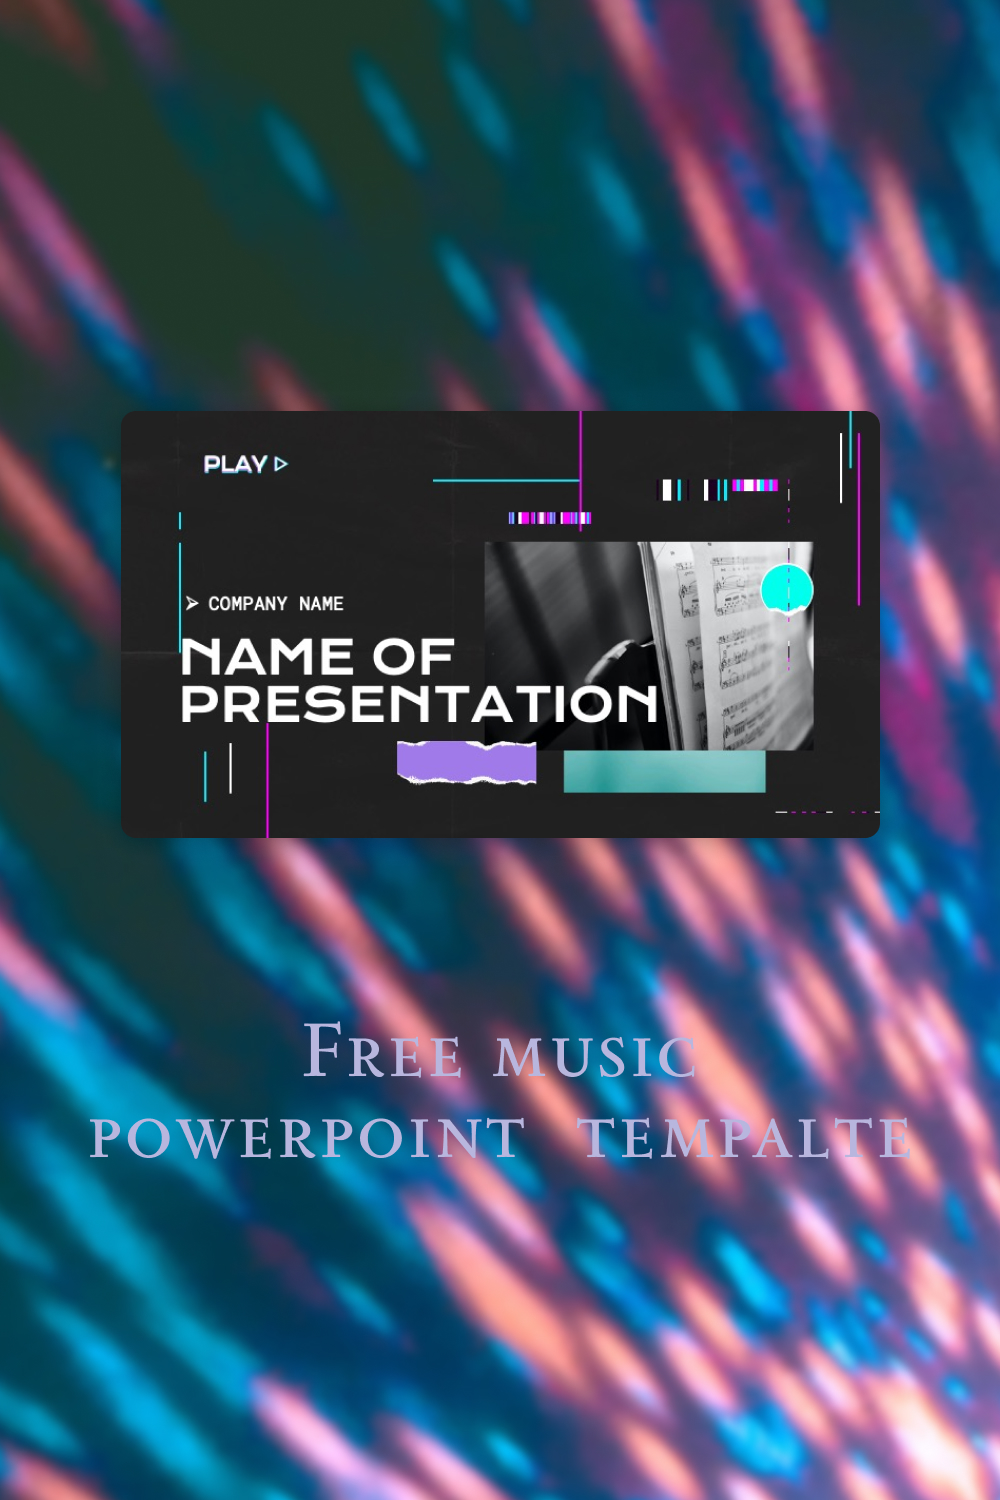 Free music powerpoint tempalte of pinterest.